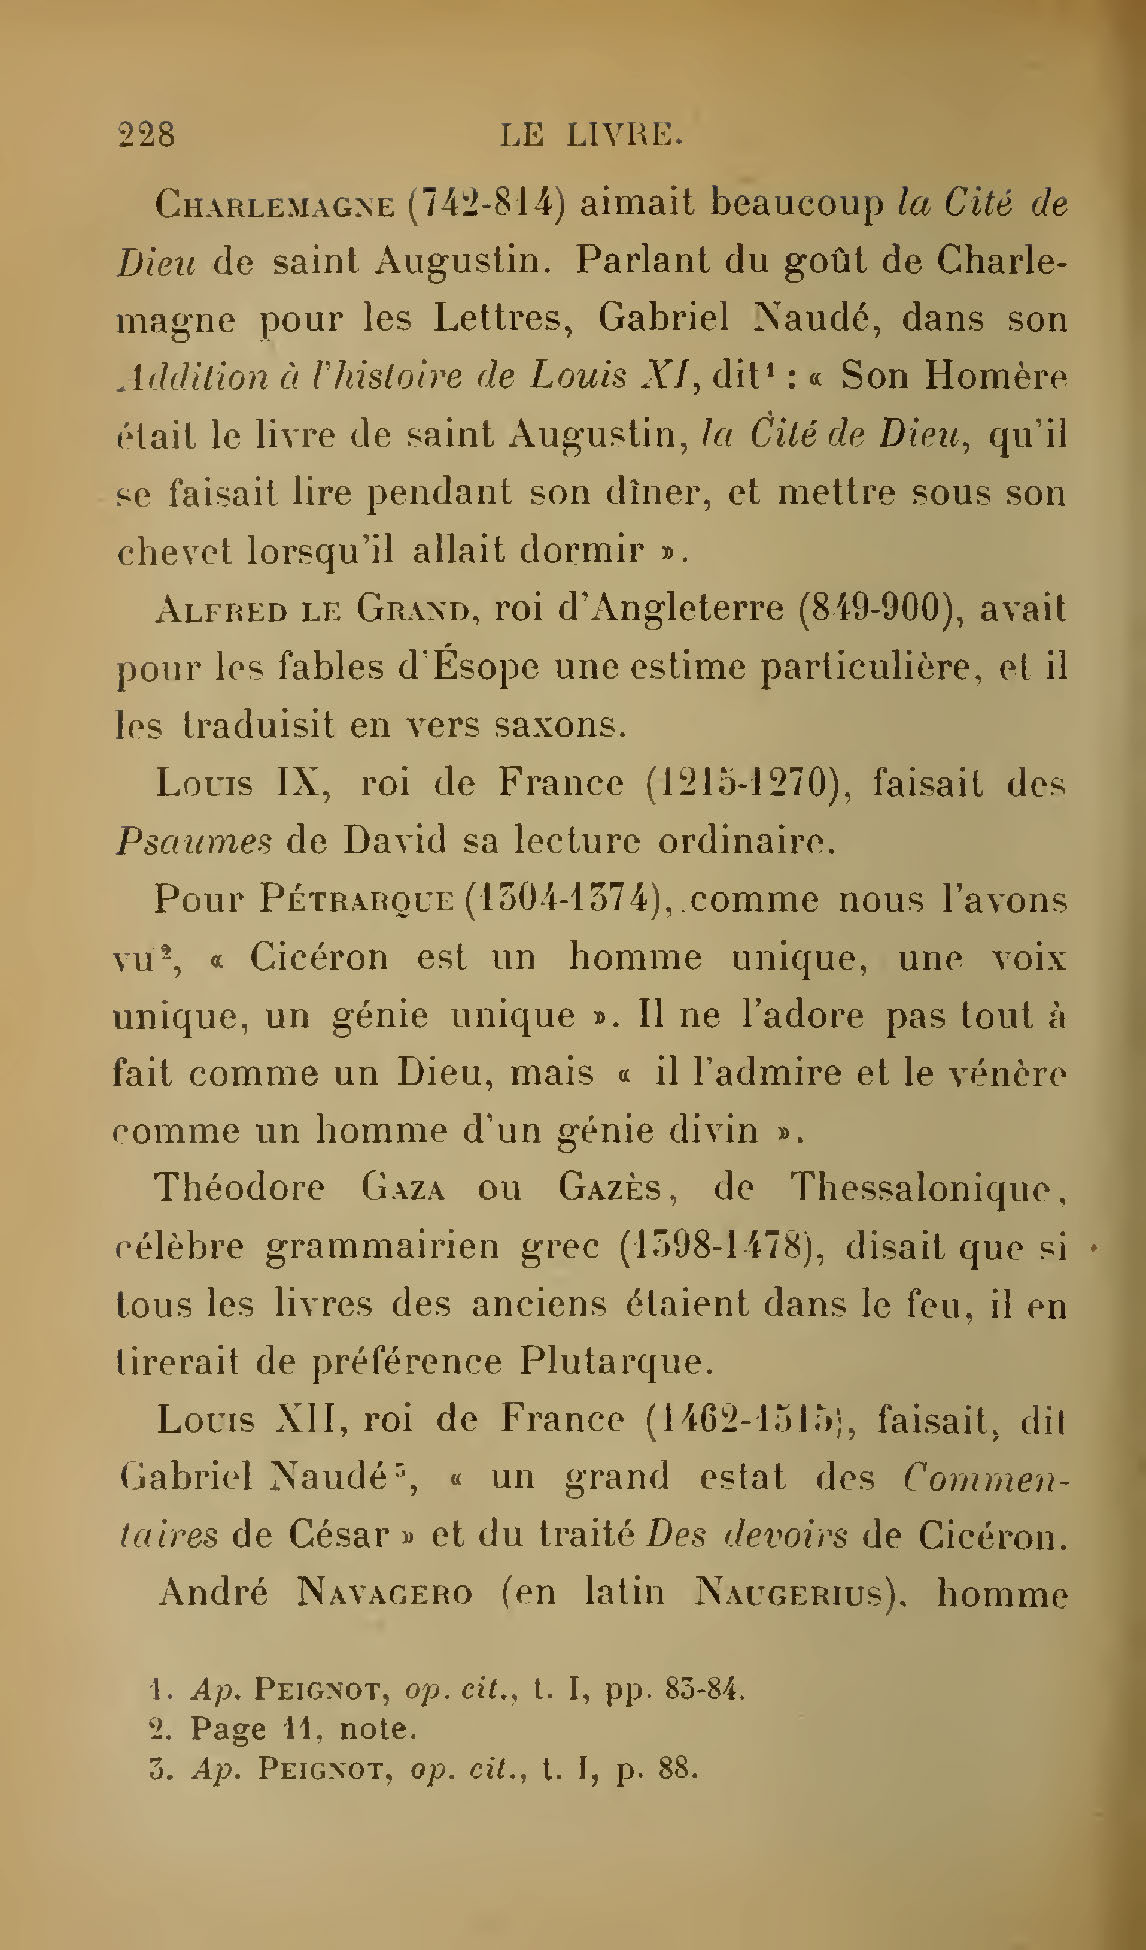 Albert Cim, Le Livre, t. I, p. 228.